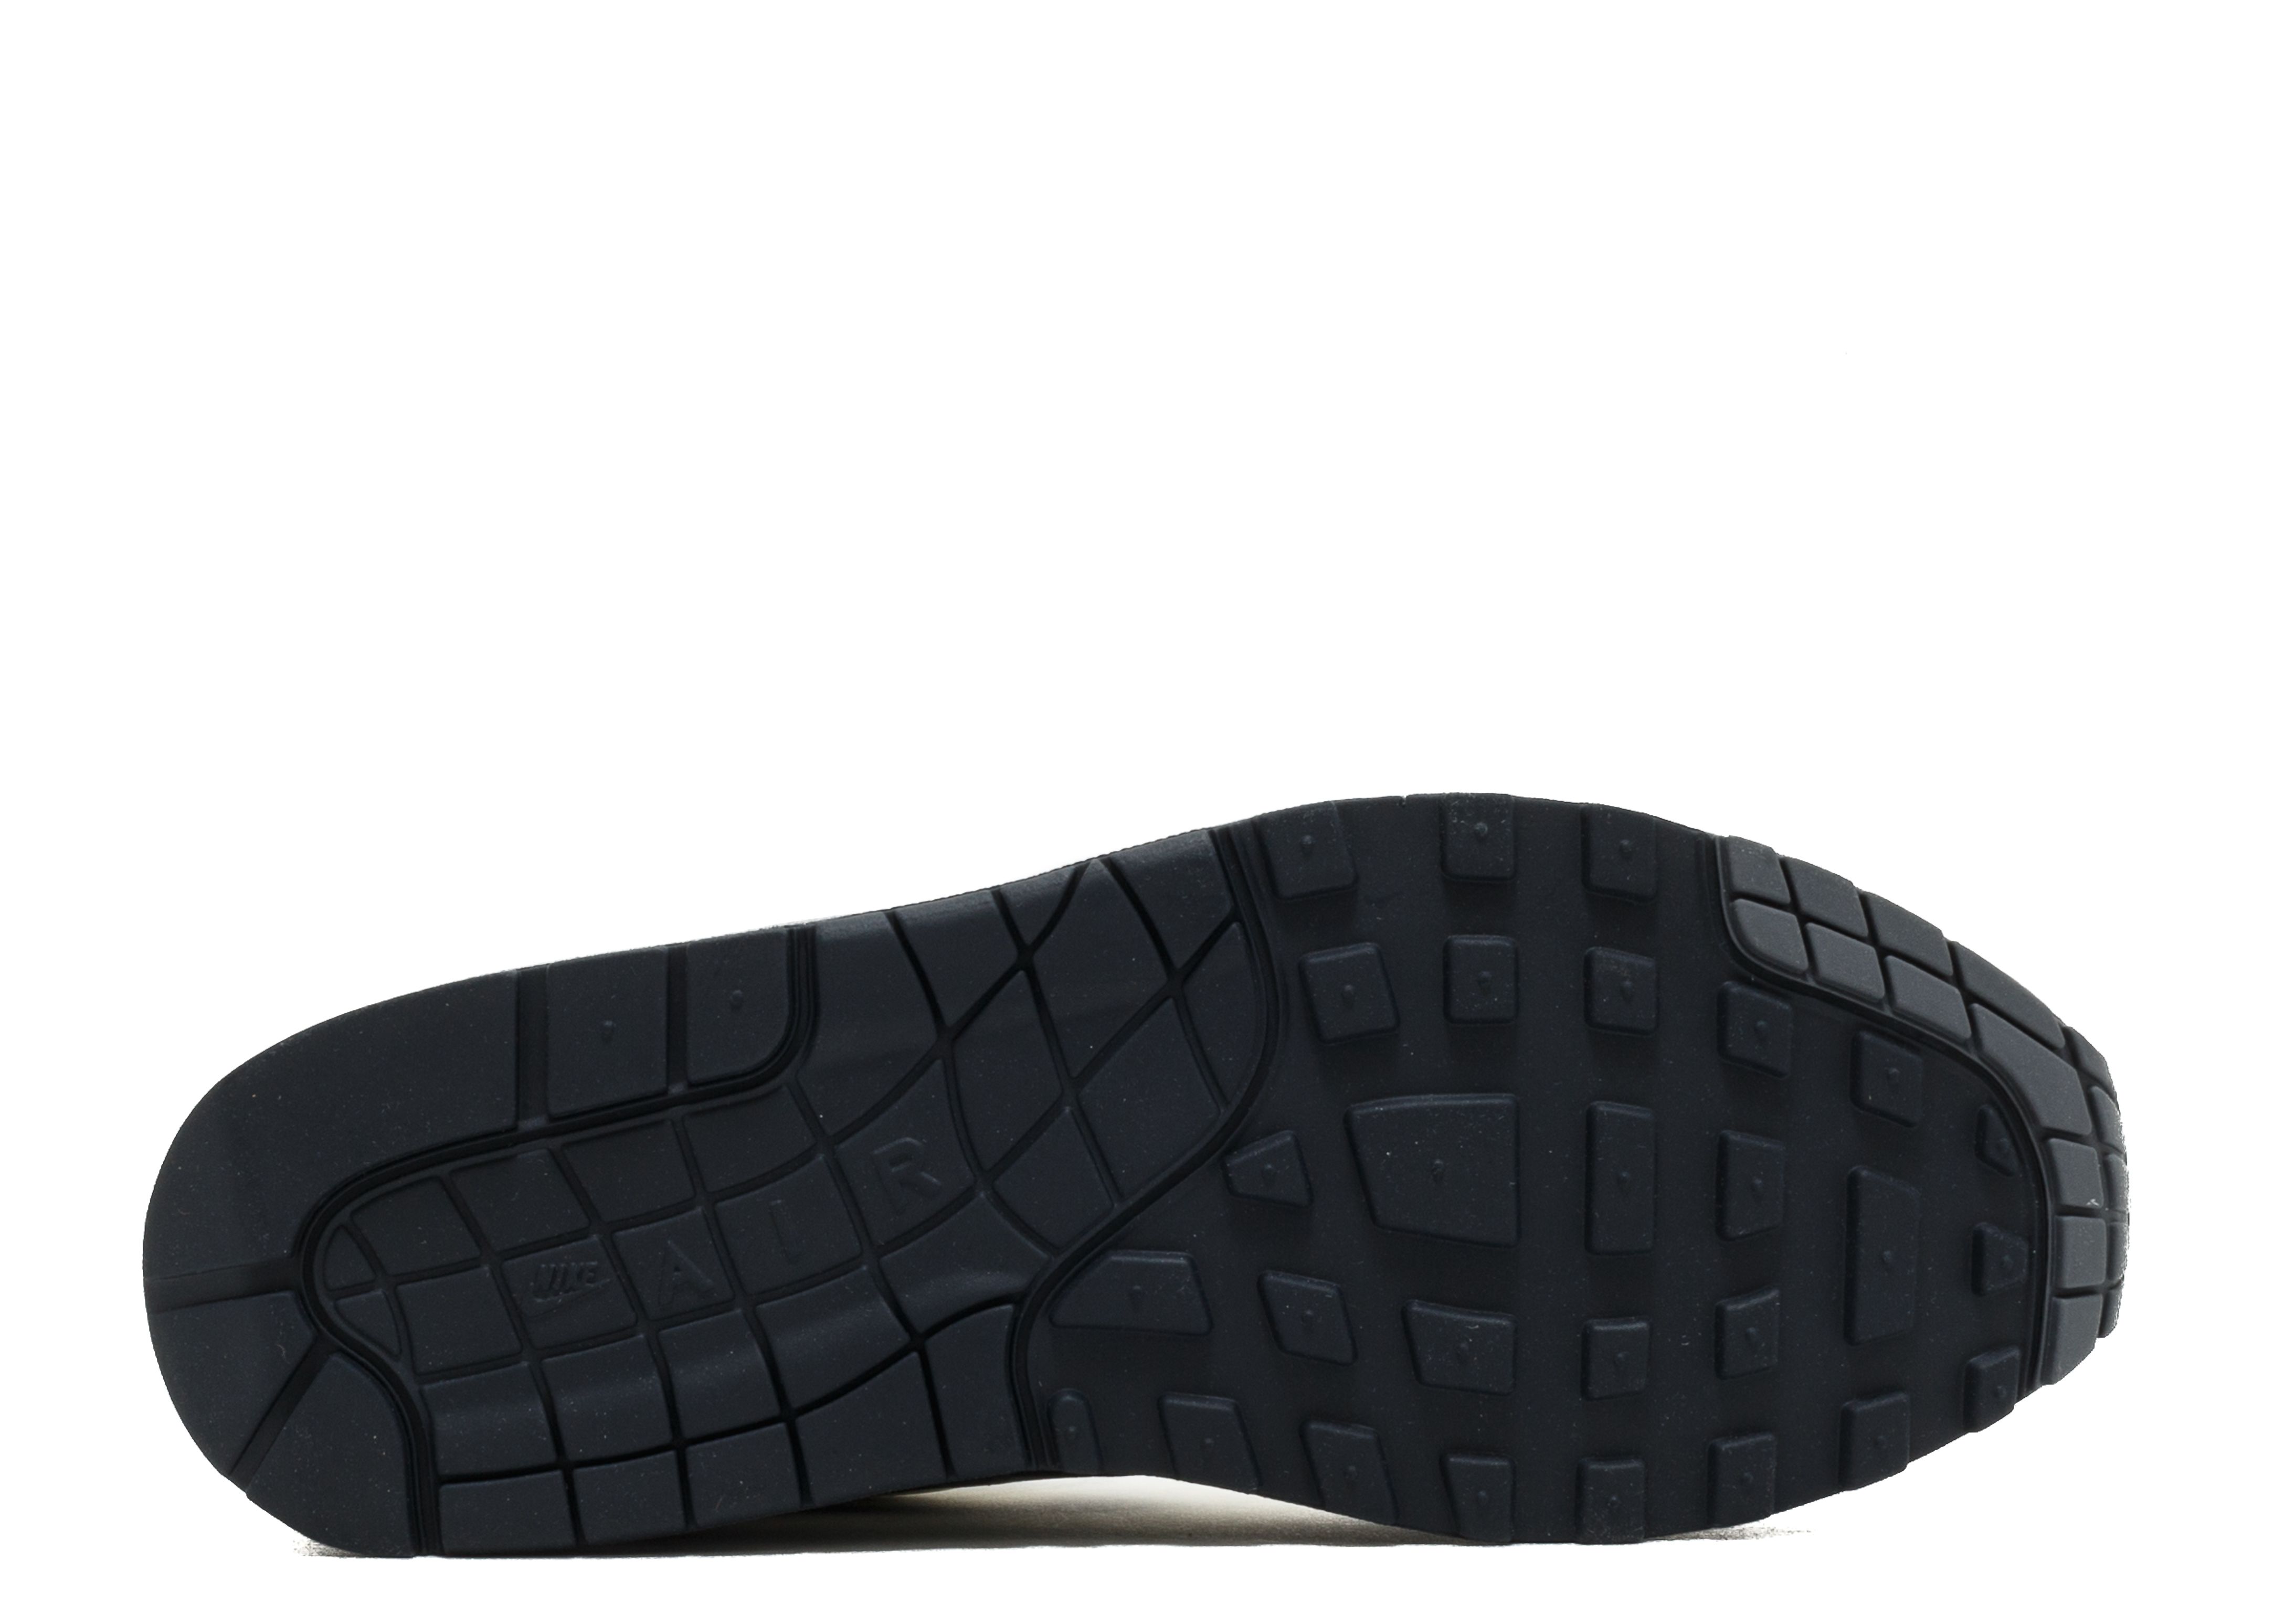 Nike Air Max 1 Premium - Dark Obsidian, Metallic Grey & Atomic